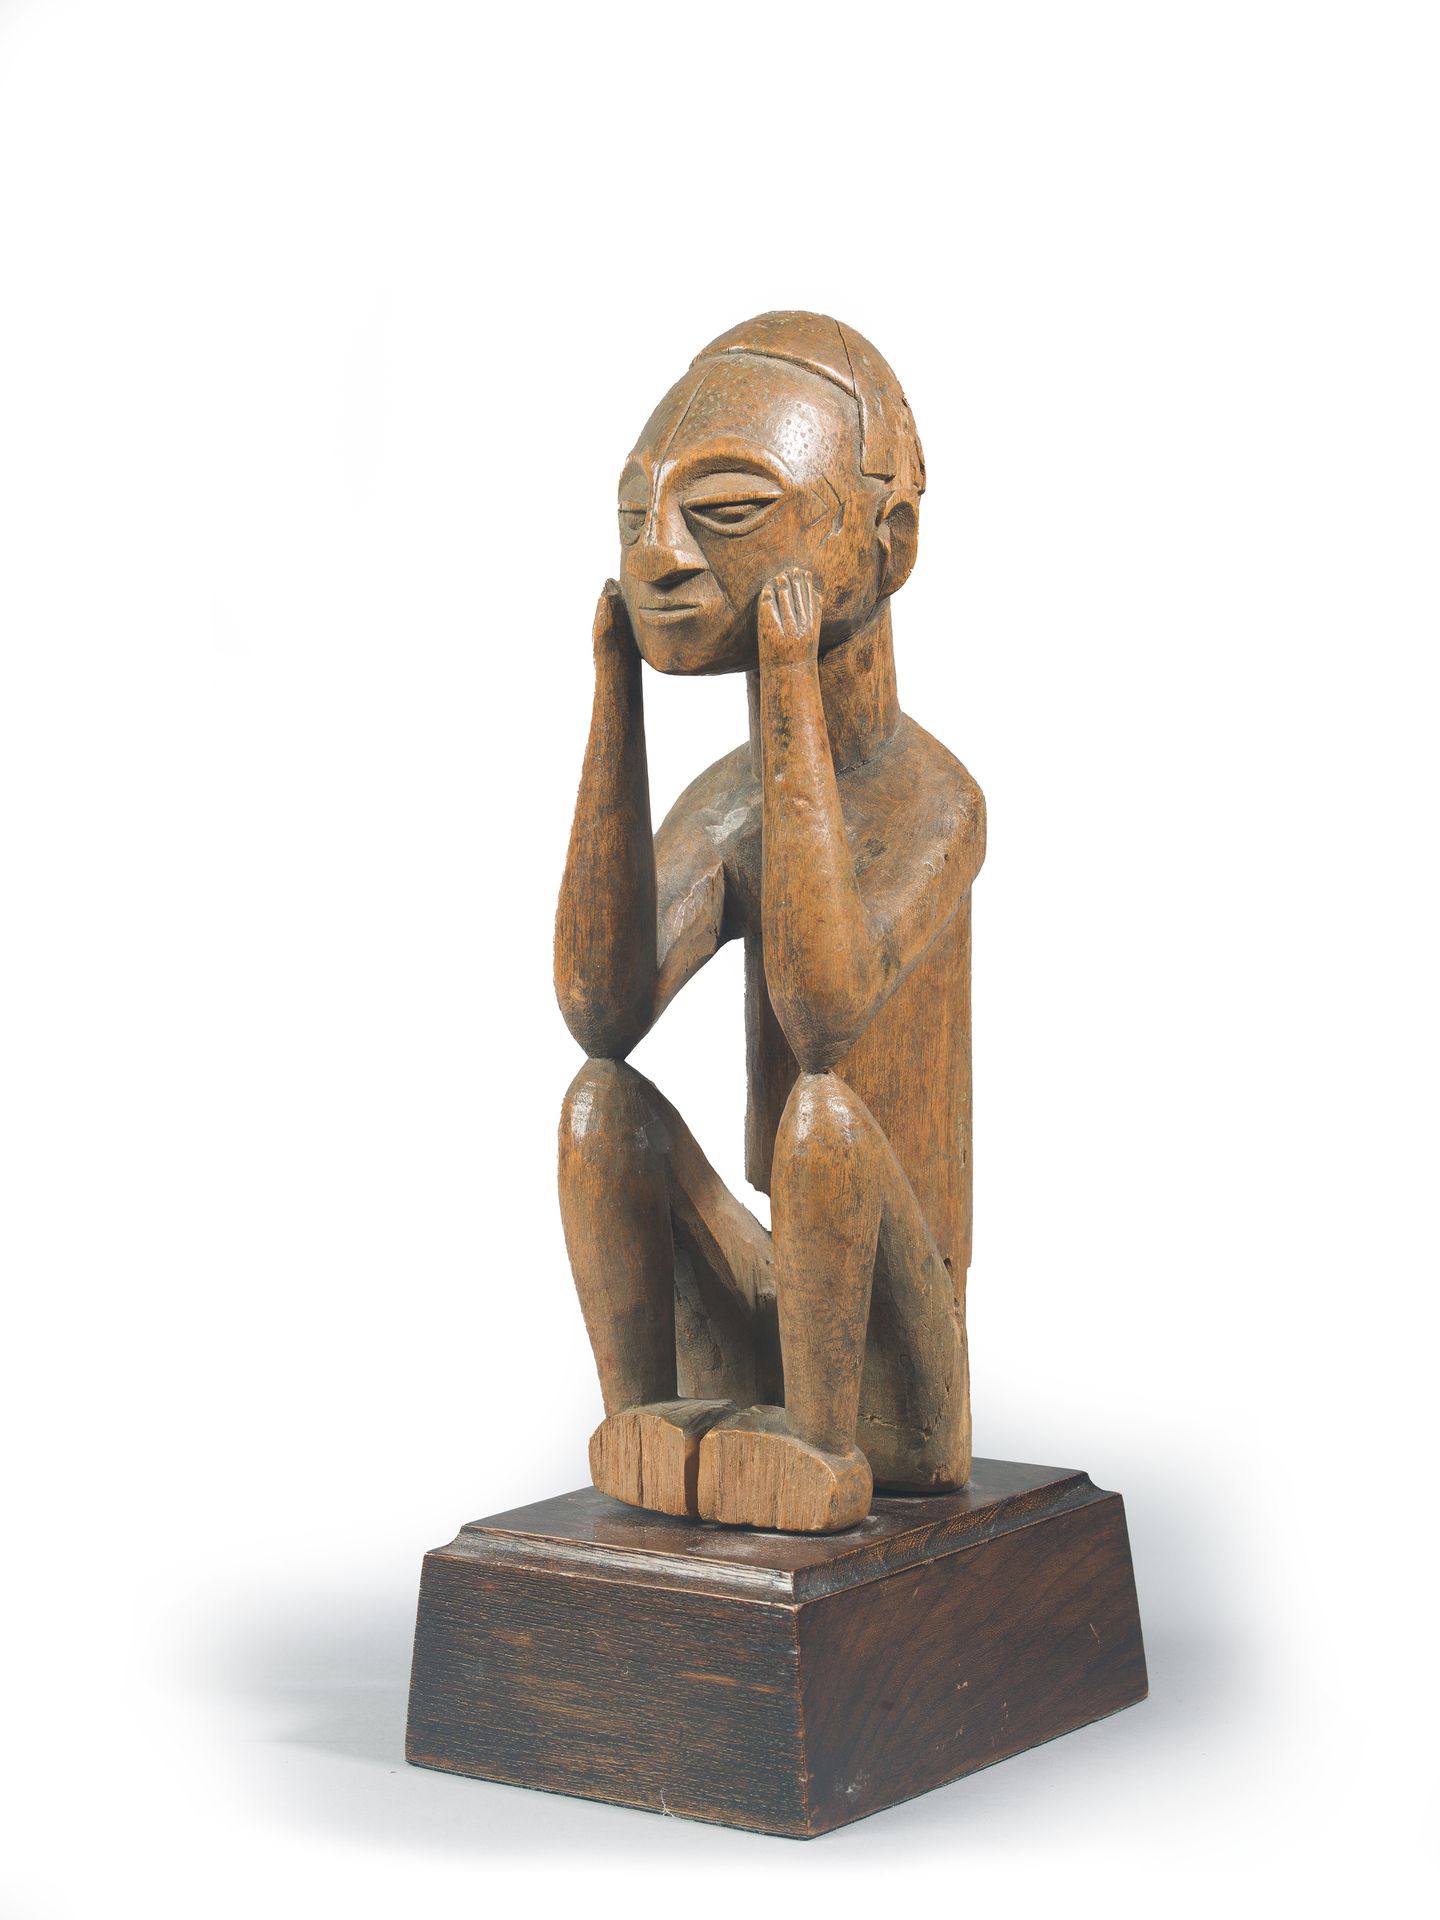 Null 浩然正气雕像

抛光的木材

刚果民主共和国

19-20世纪

28 x 9 cm